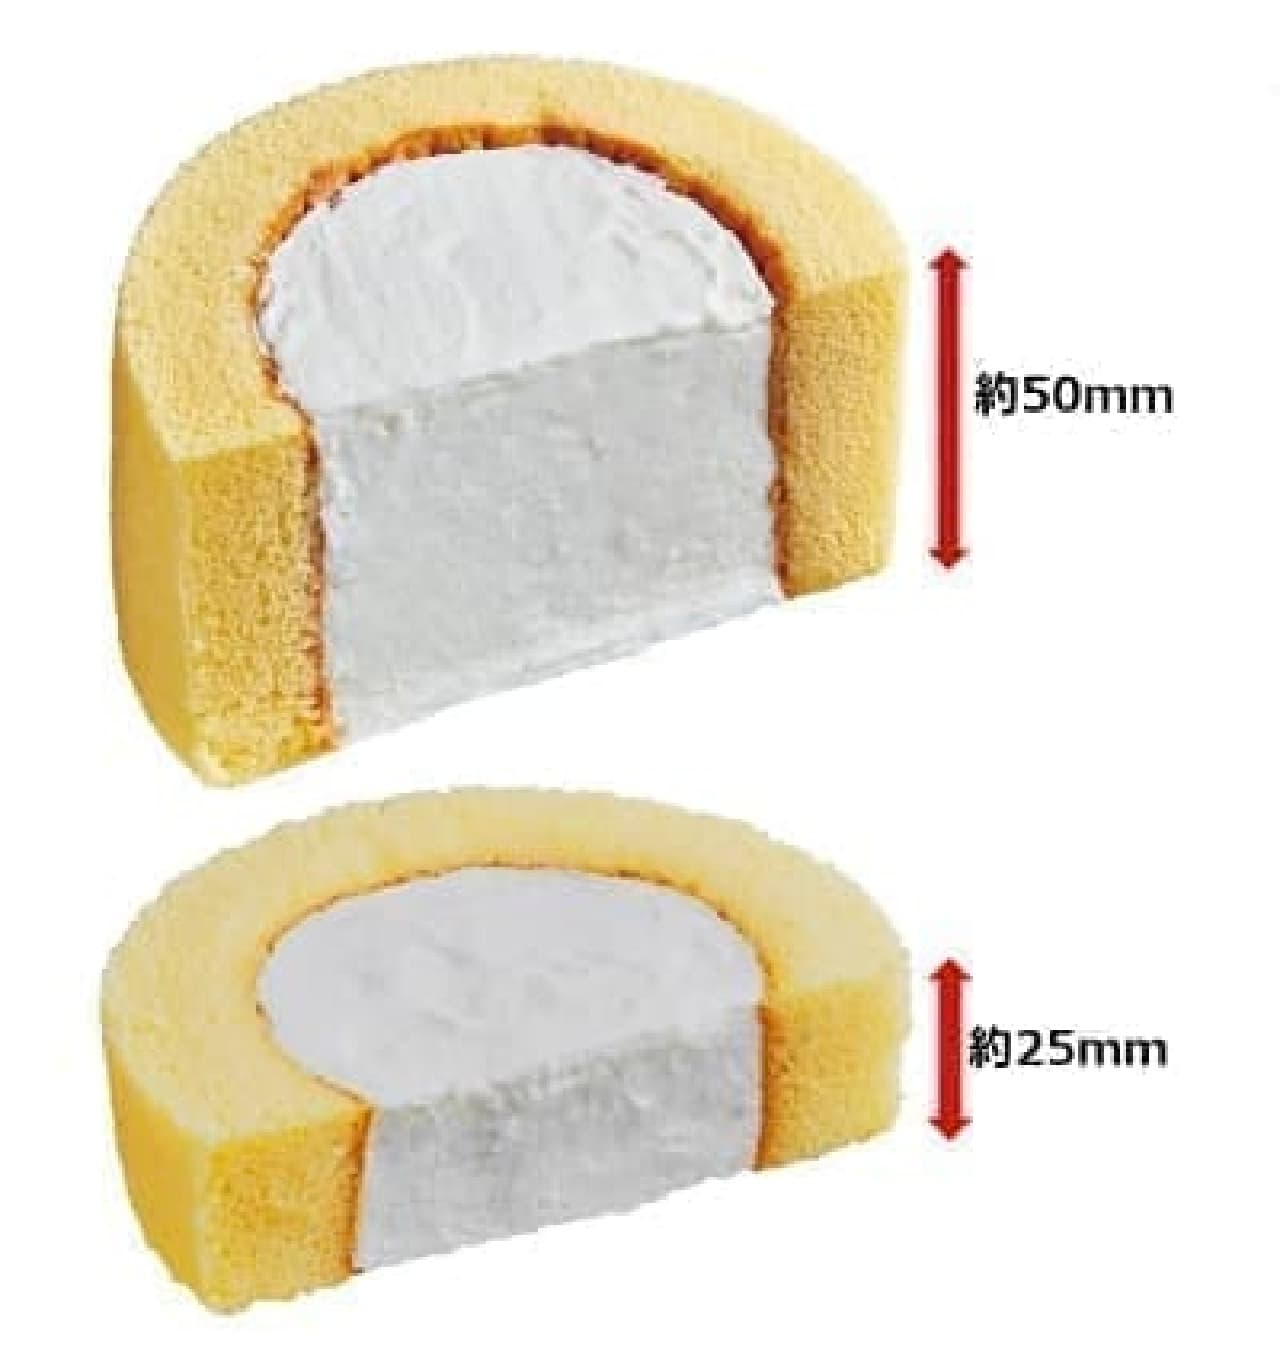 Lawson "Premium roll cake x 2" and "Premium roll cake"